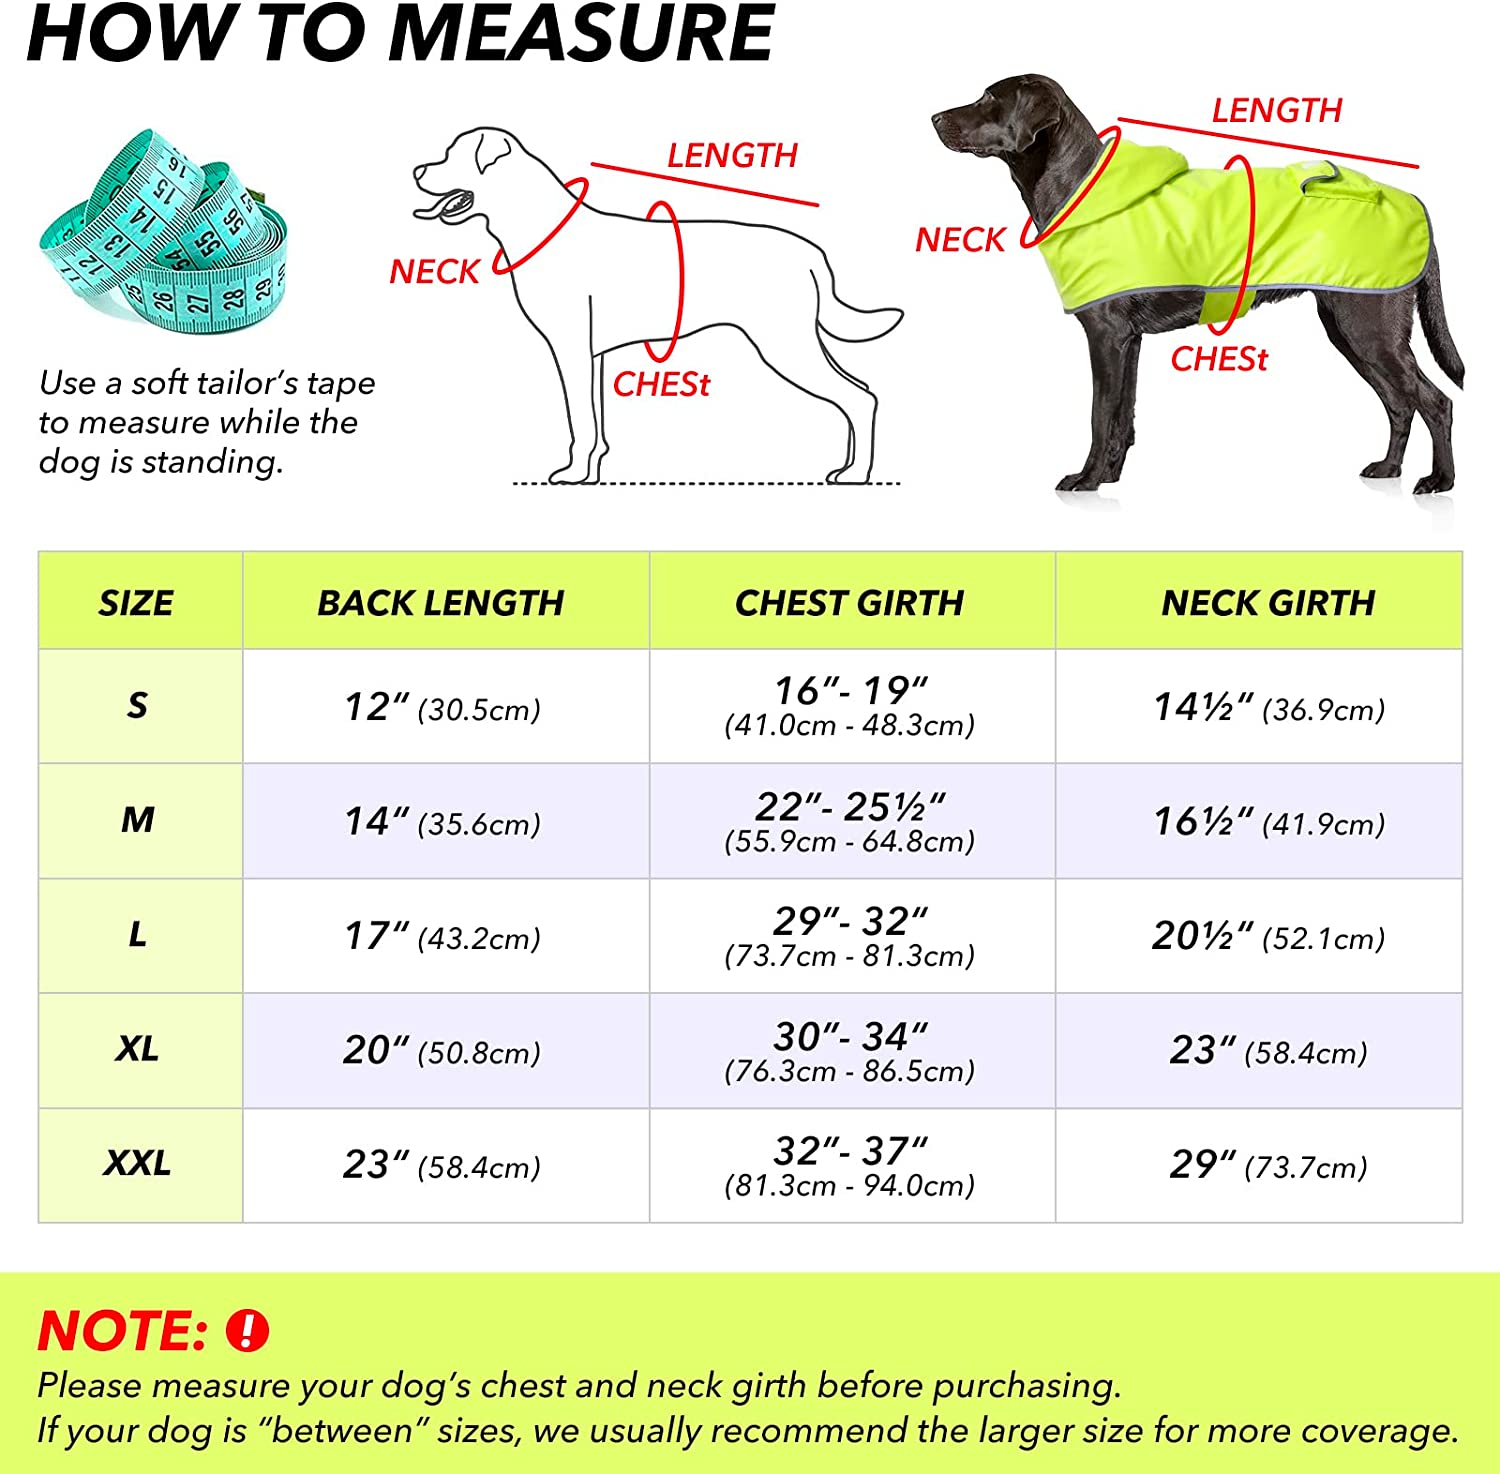 BSEEN Reversible Dog Raincoat, Adjustable Reflective Stripe Hooded, Waterproof Dog Rain Jacket for Large Dogs - BSEEN Direct